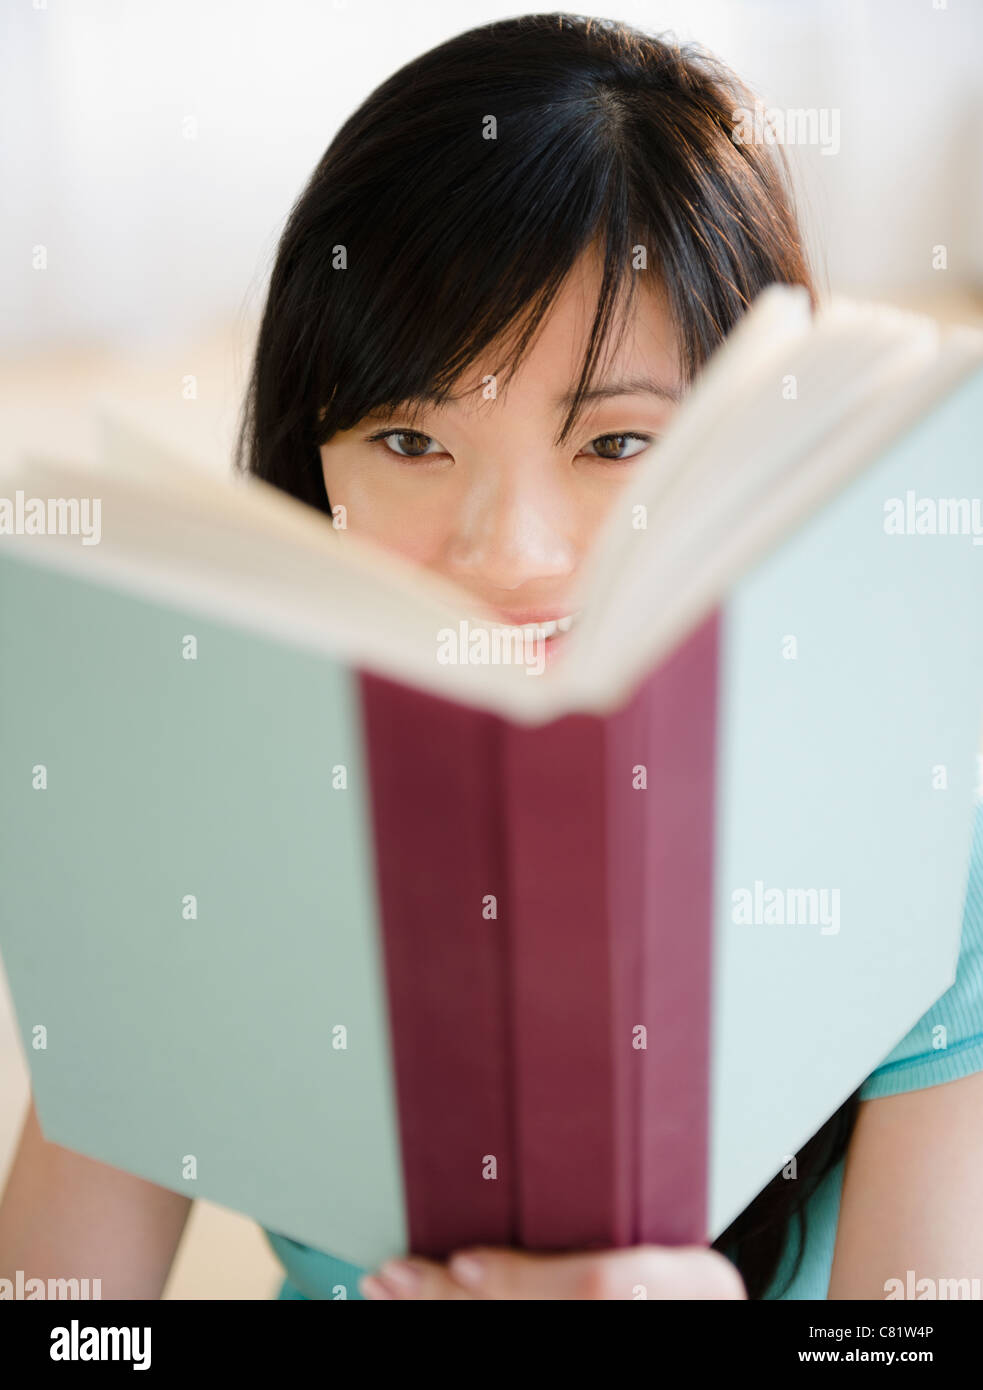 Korean woman reading book Stock Photo